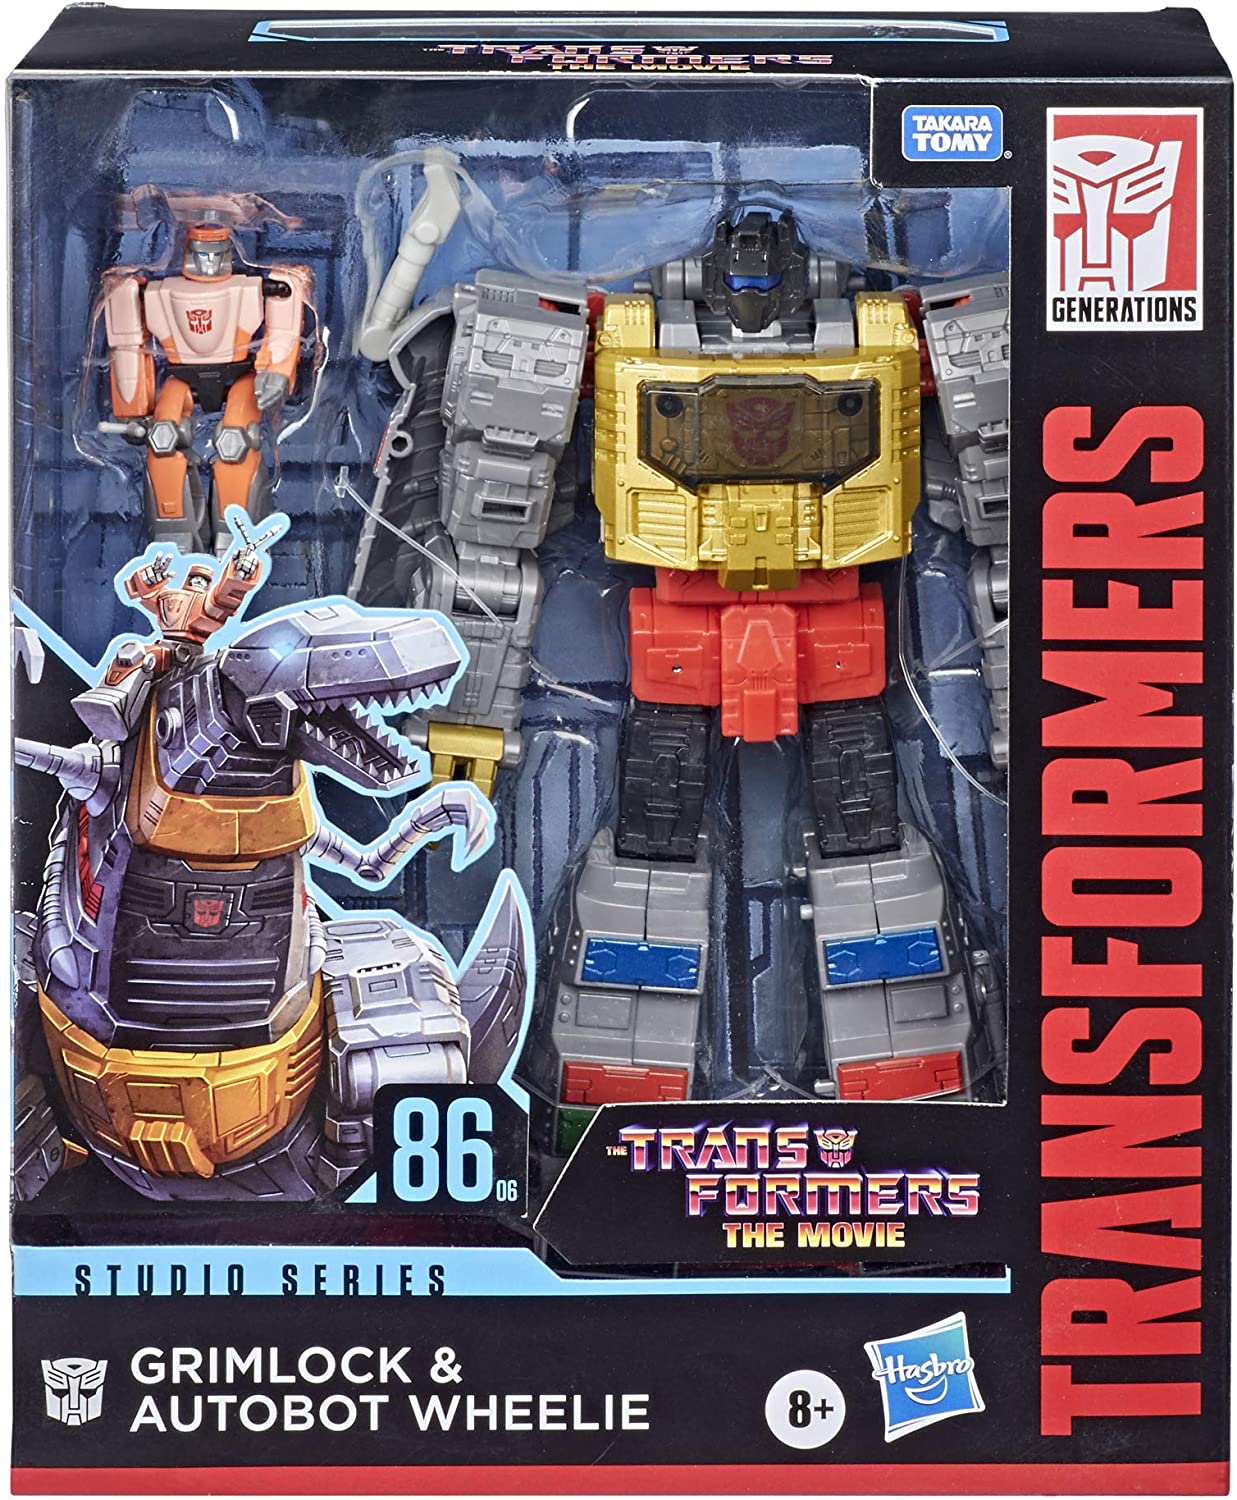 2019 Hasbro Transformers Mini Limited Edition GrimLock AutoBot Figure Toy 